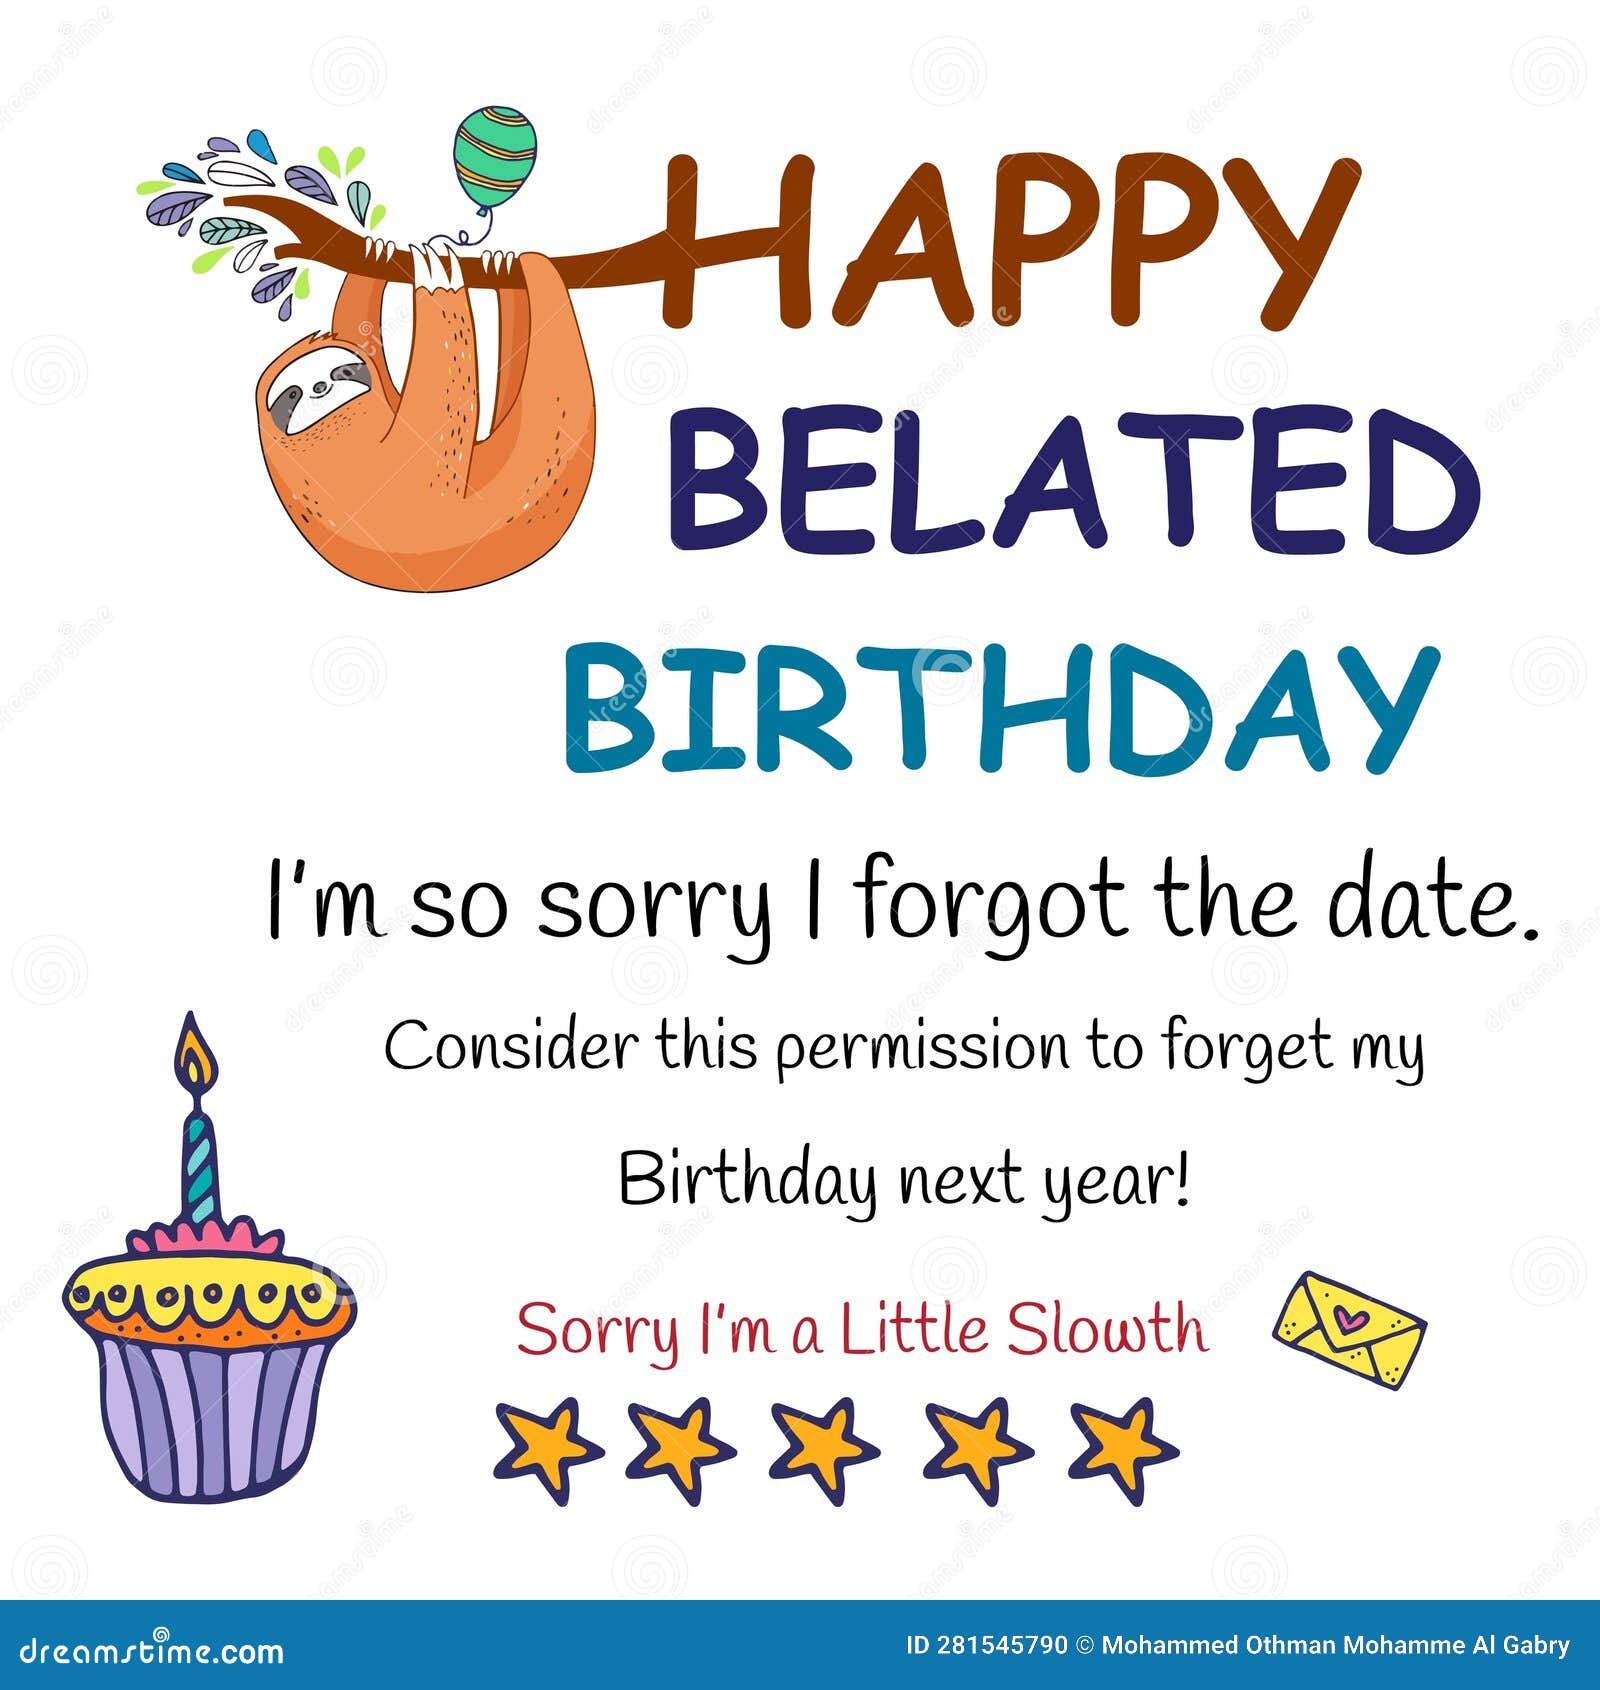 Happy Belated Birthday, Late Birthday, Funny, Birthday, Belated, Late ...